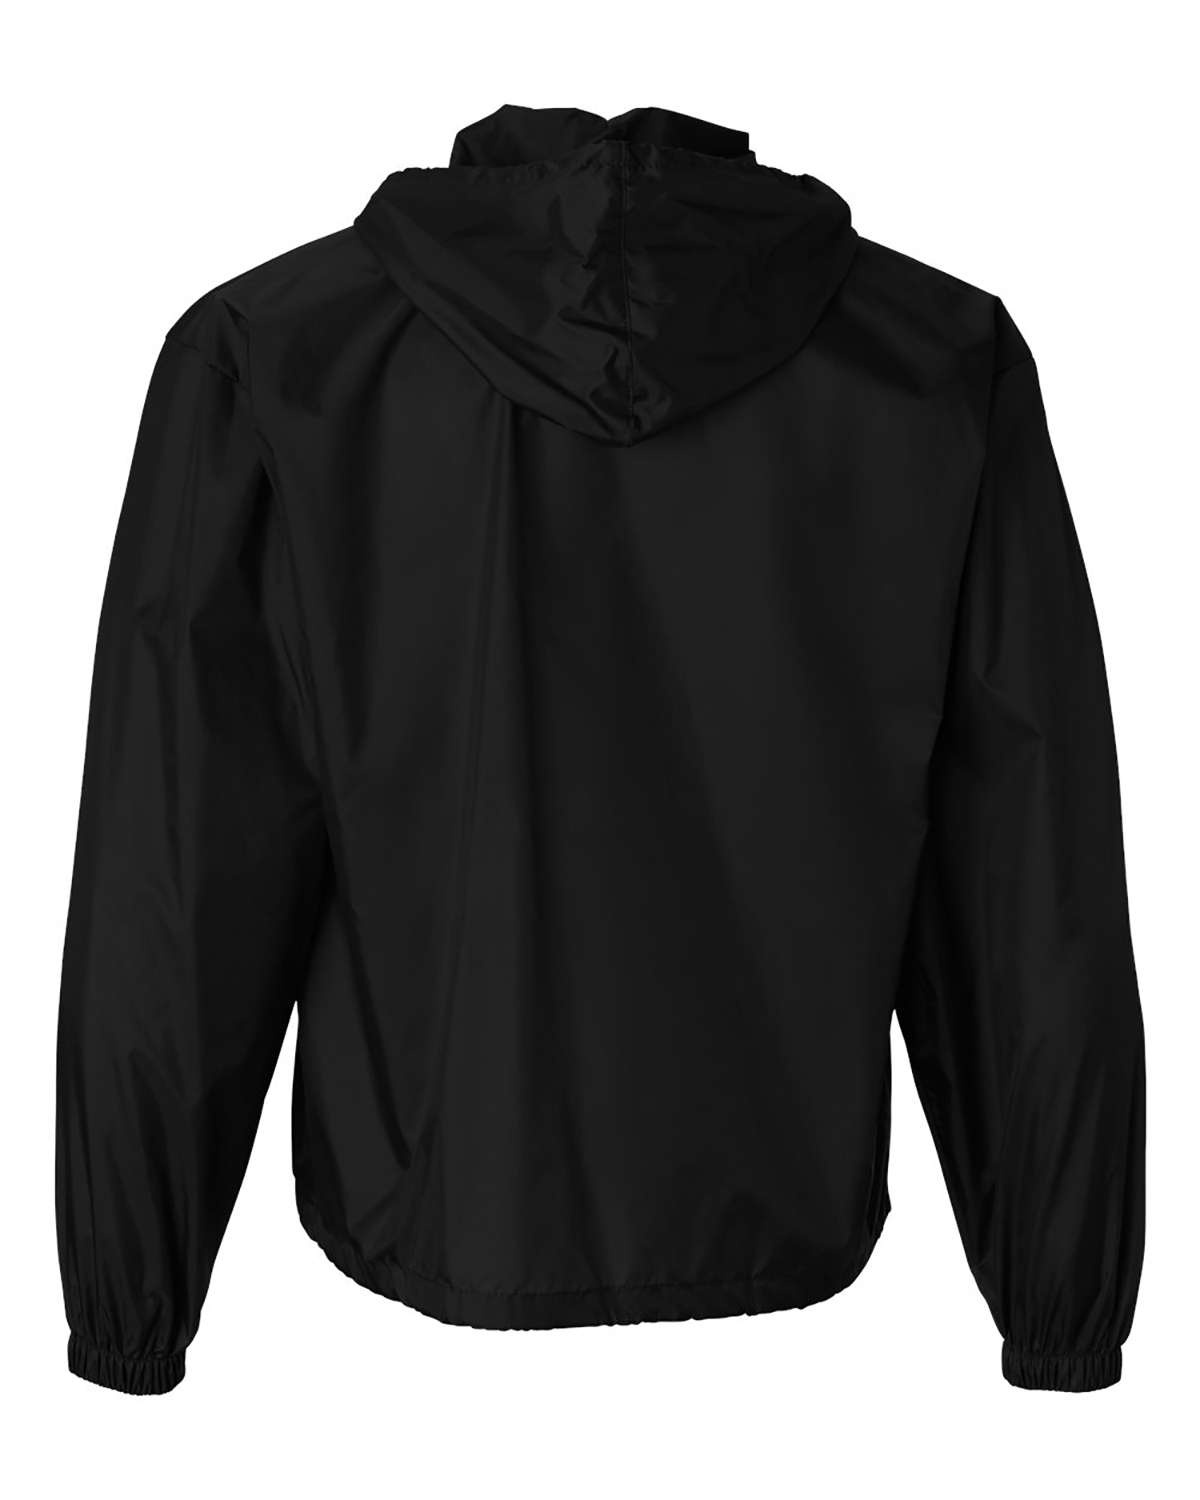 'Augusta Sportswear 3130 Packable Half-Zip Pullover'